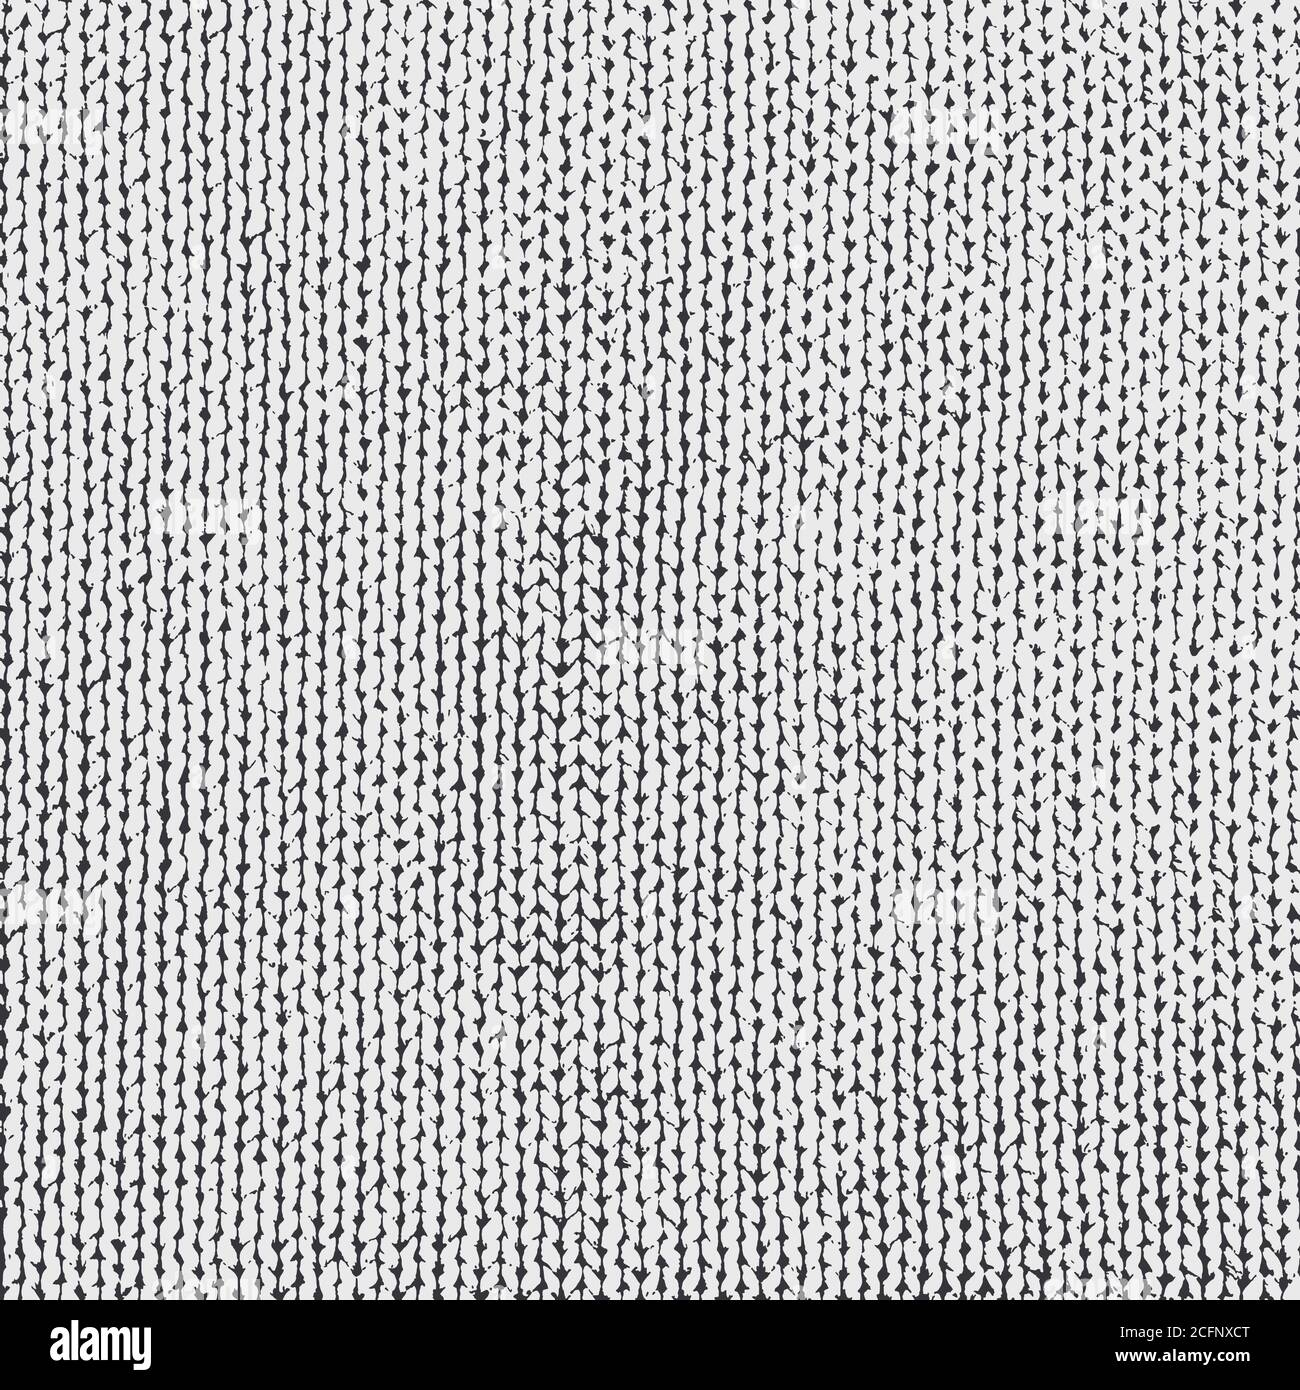 https://c8.alamy.com/comp/2CFNXCT/grunge-overlay-texture-of-weaving-fabric-abstract-halftone-vector-illustration-2CFNXCT.jpg